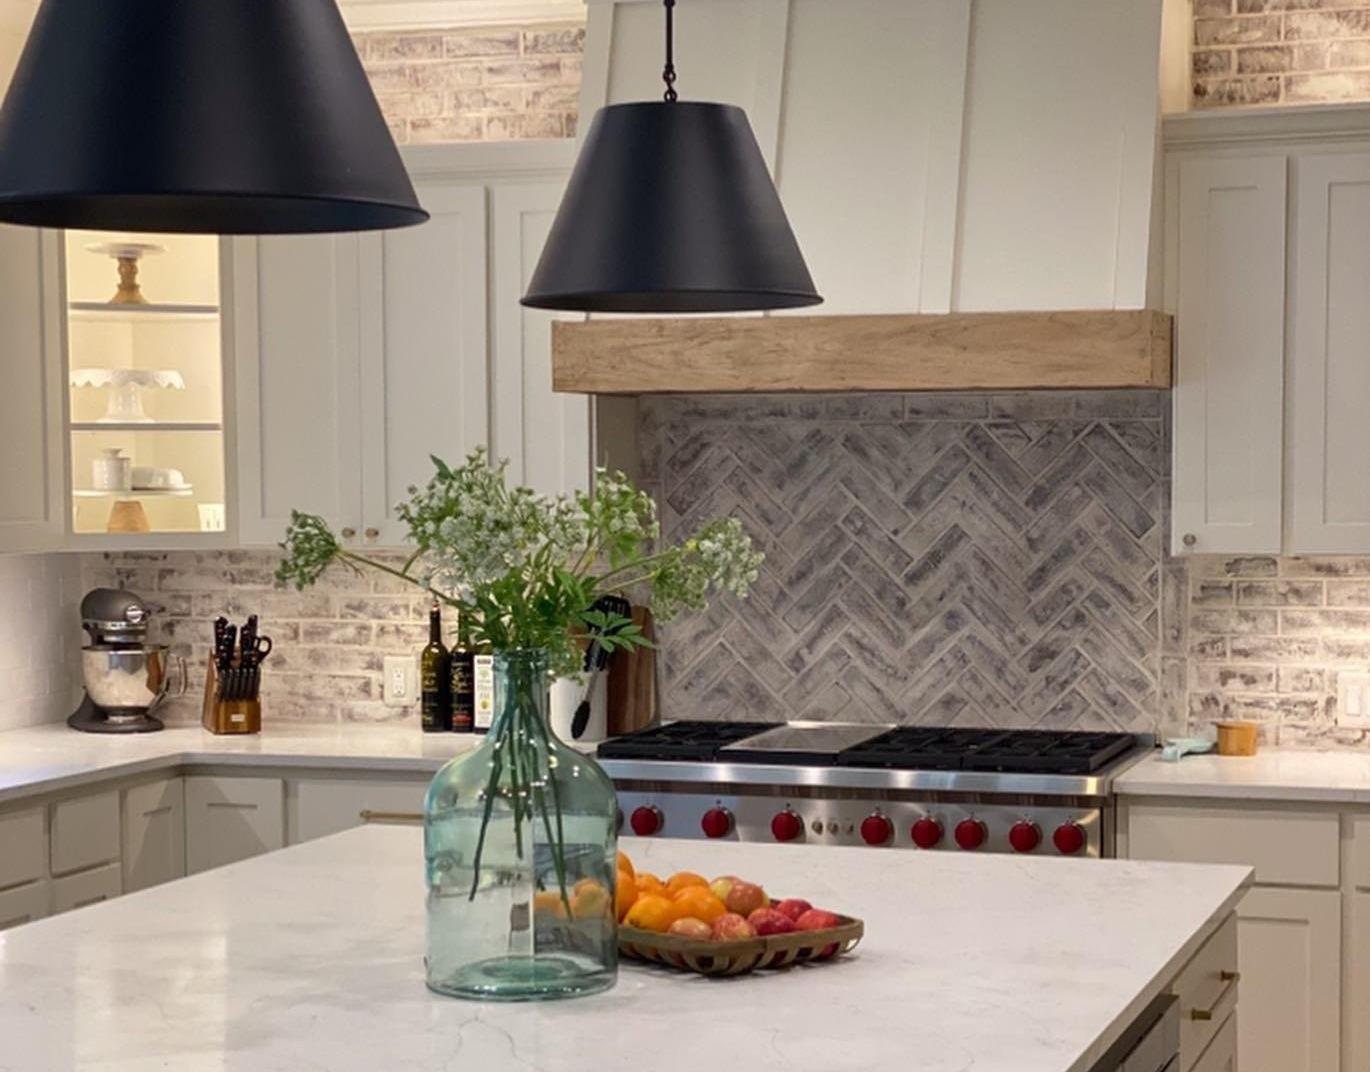 A kitchen with marble countertops and herringbone backsplash.